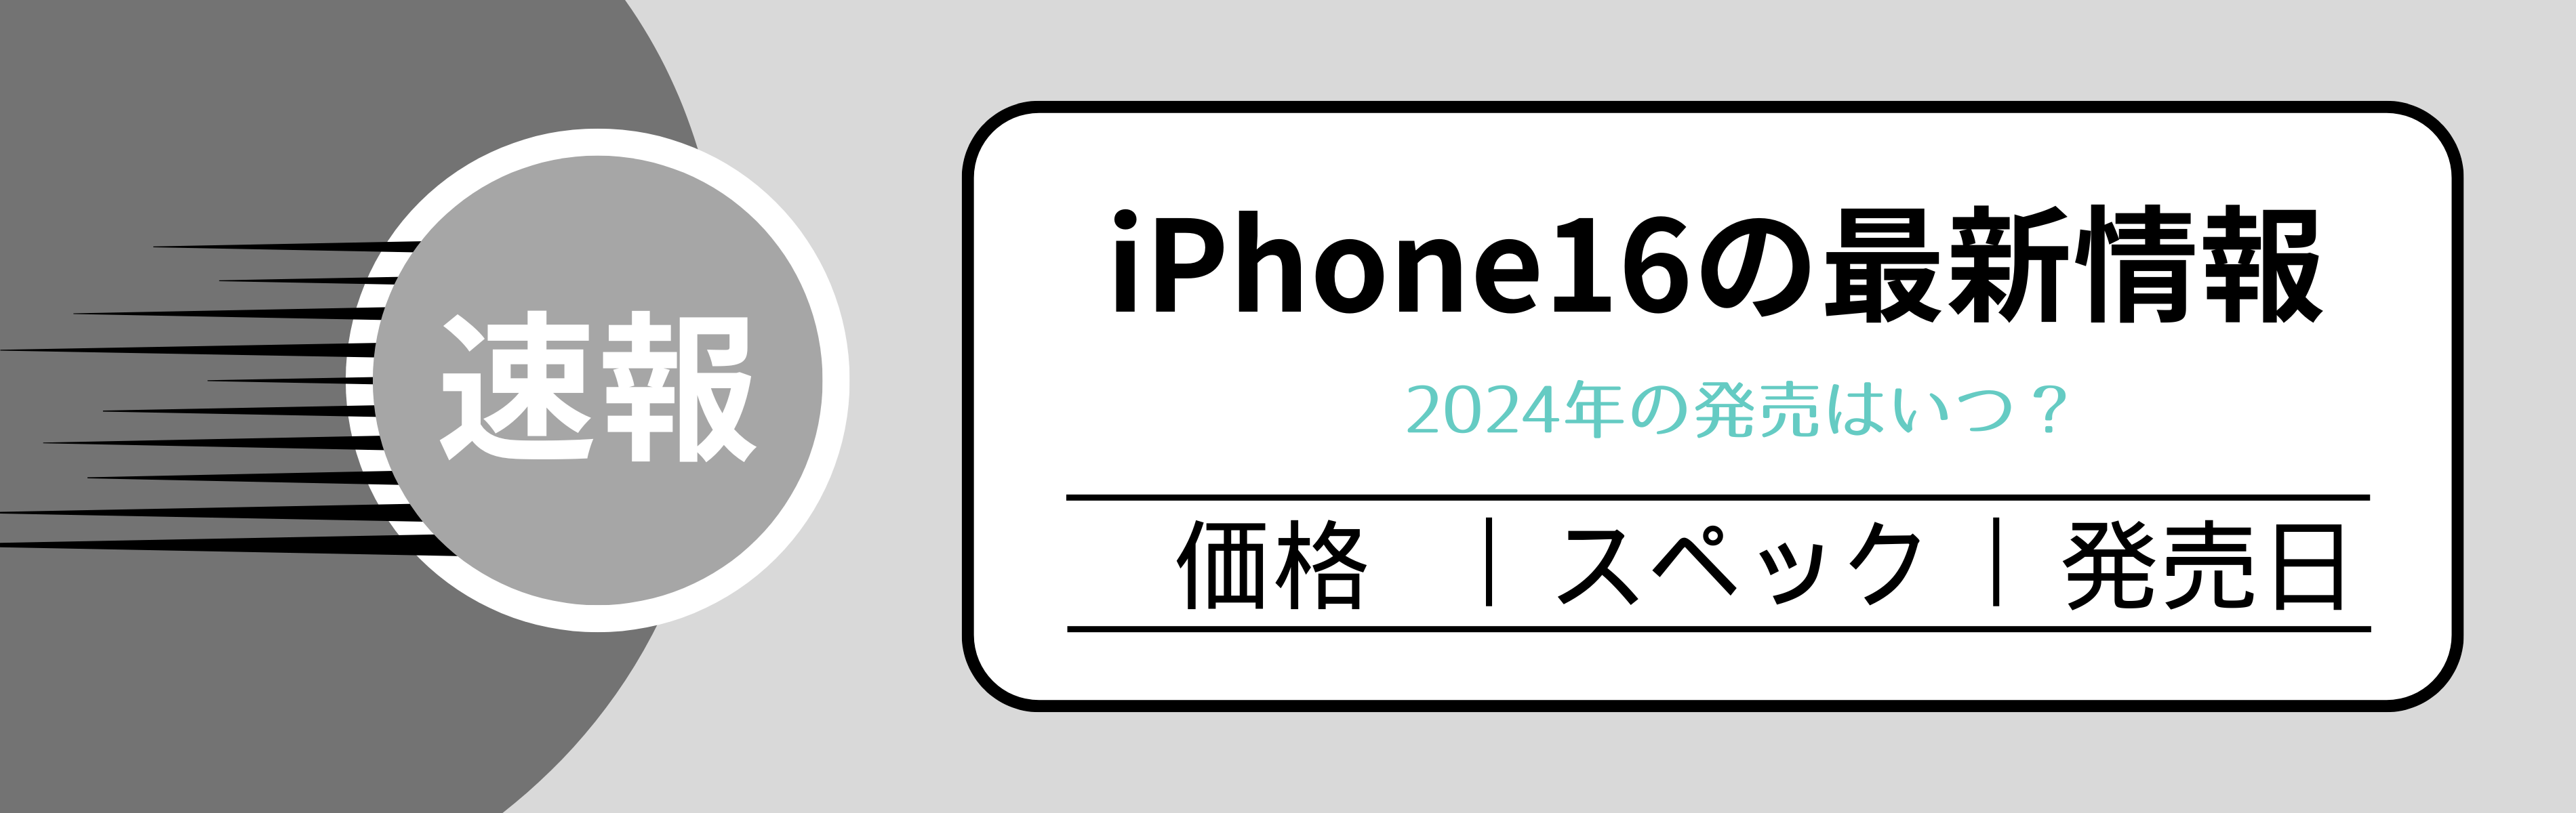 iPhone16情報PCスライダー画像